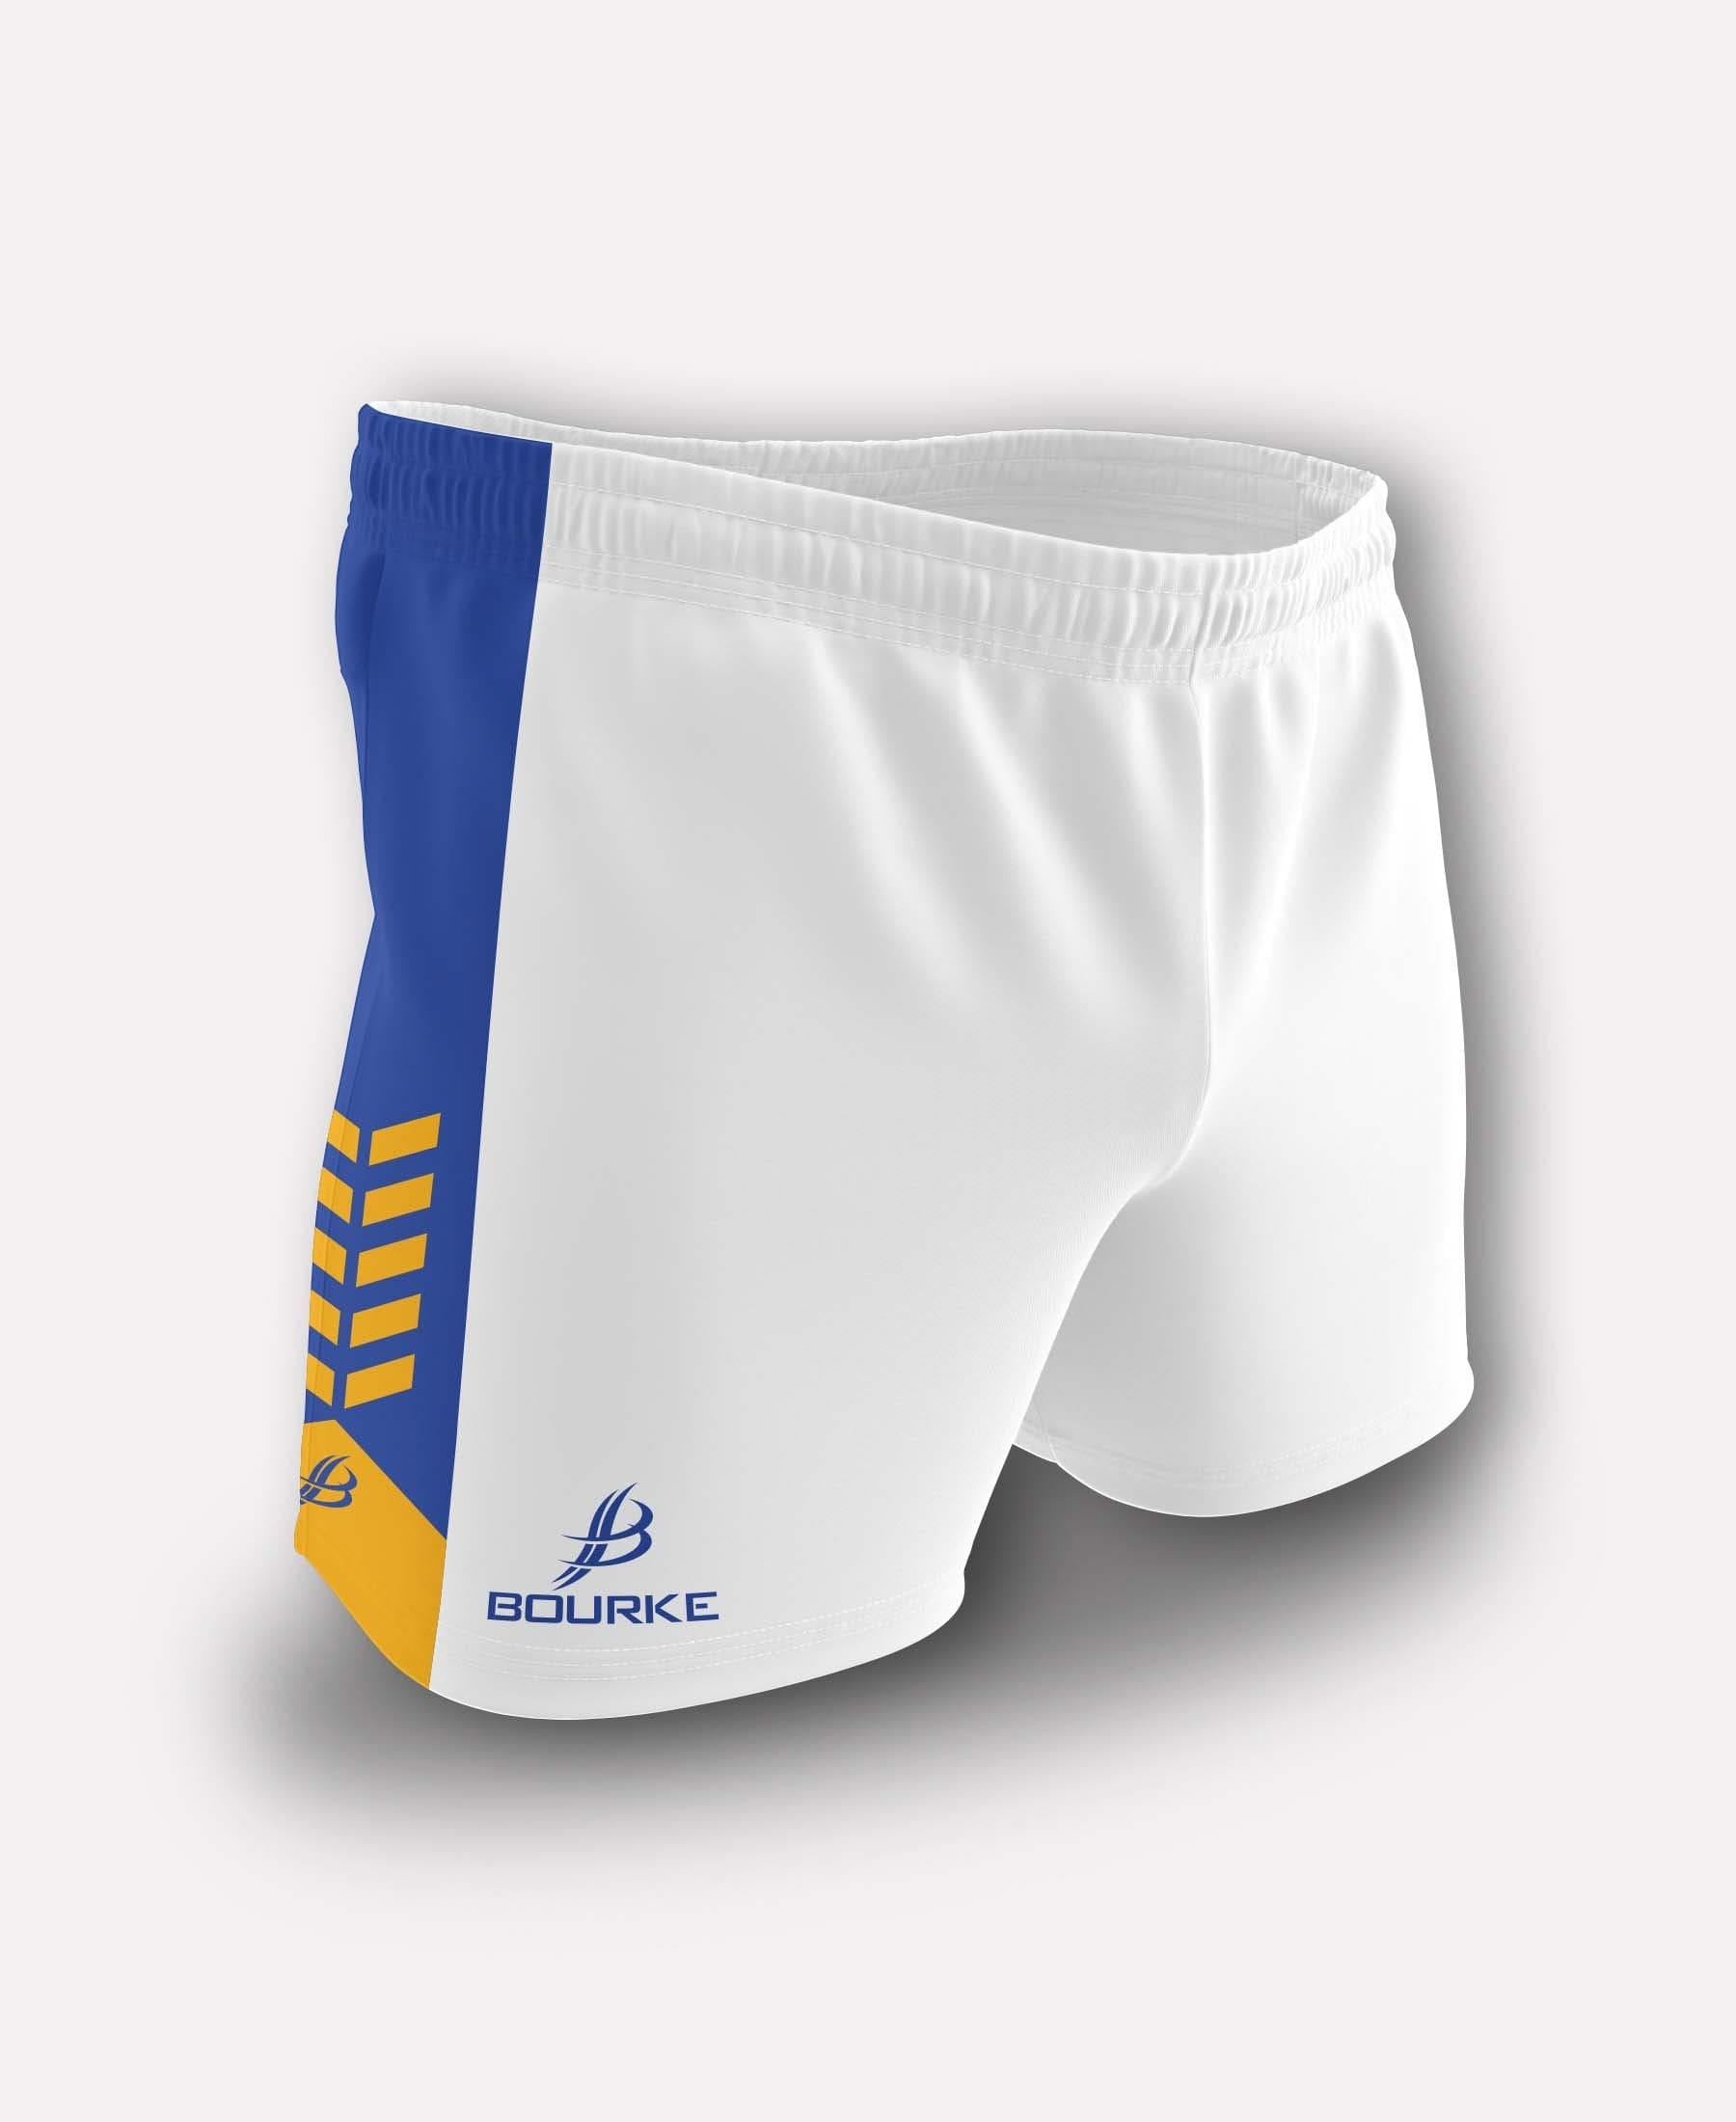 Chevron Adult Shorts (White/Royal/Amber) - Bourke Sports Limited